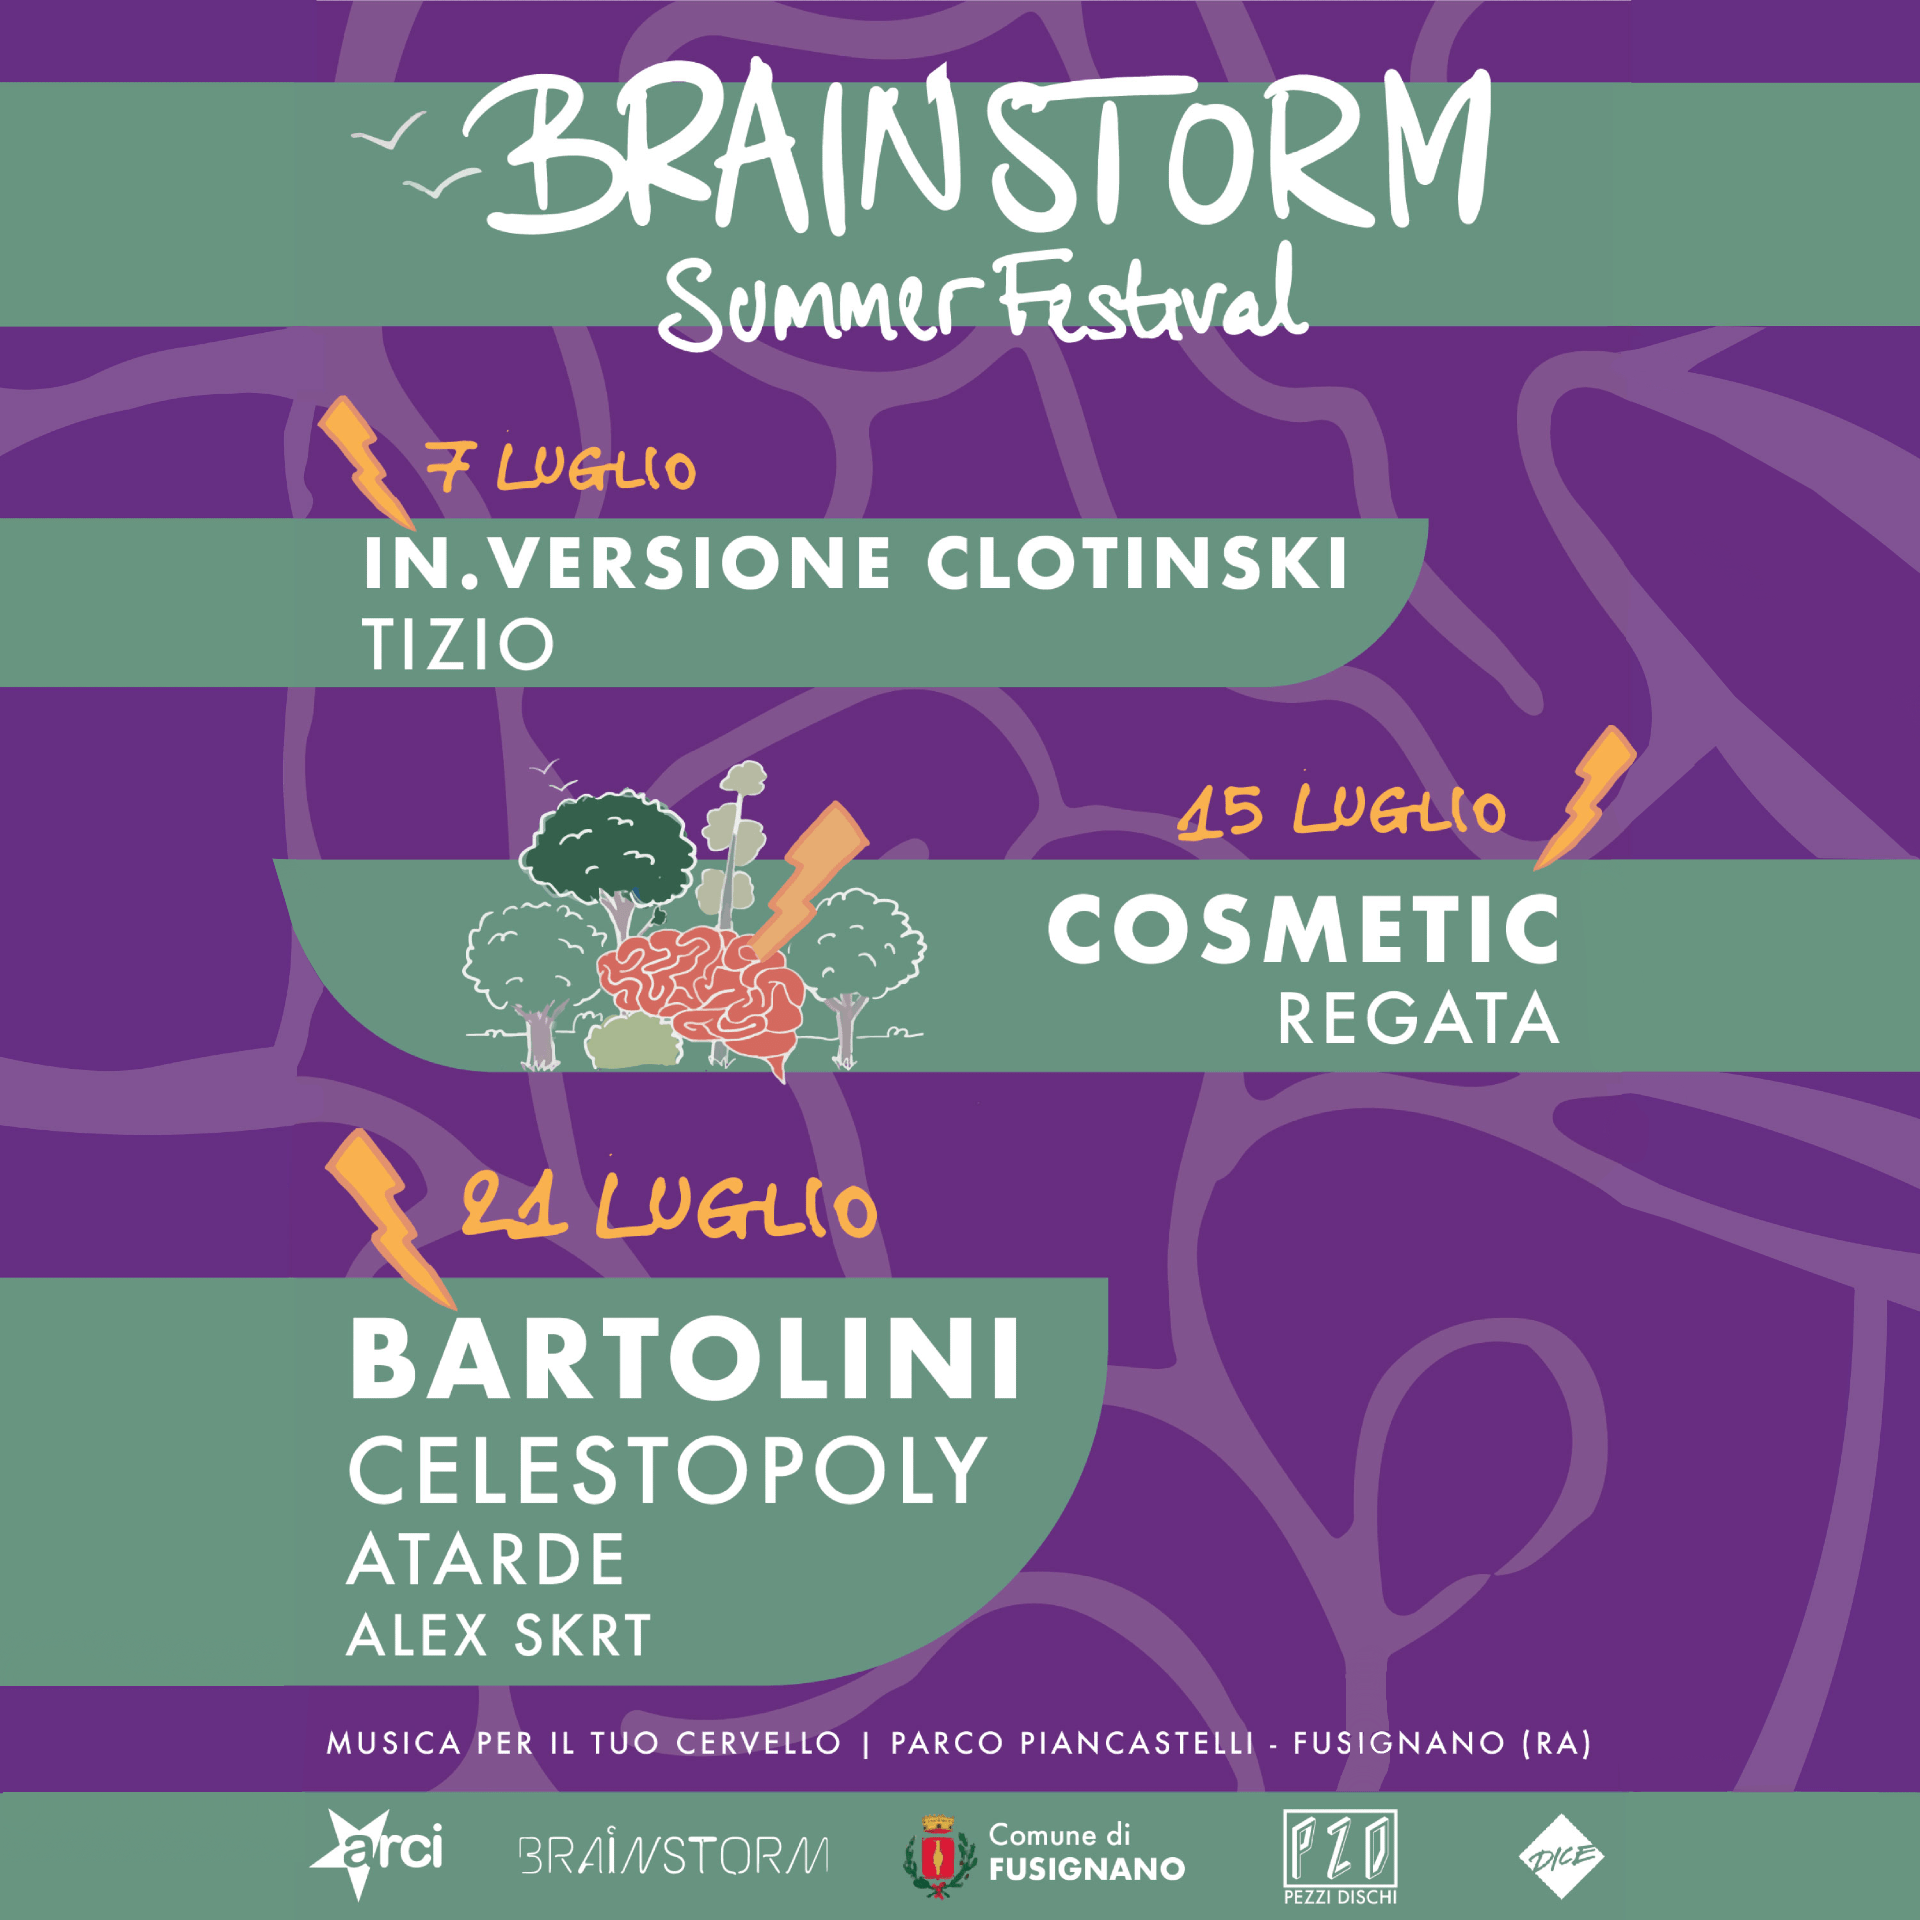 Brainstorm Summer Festival